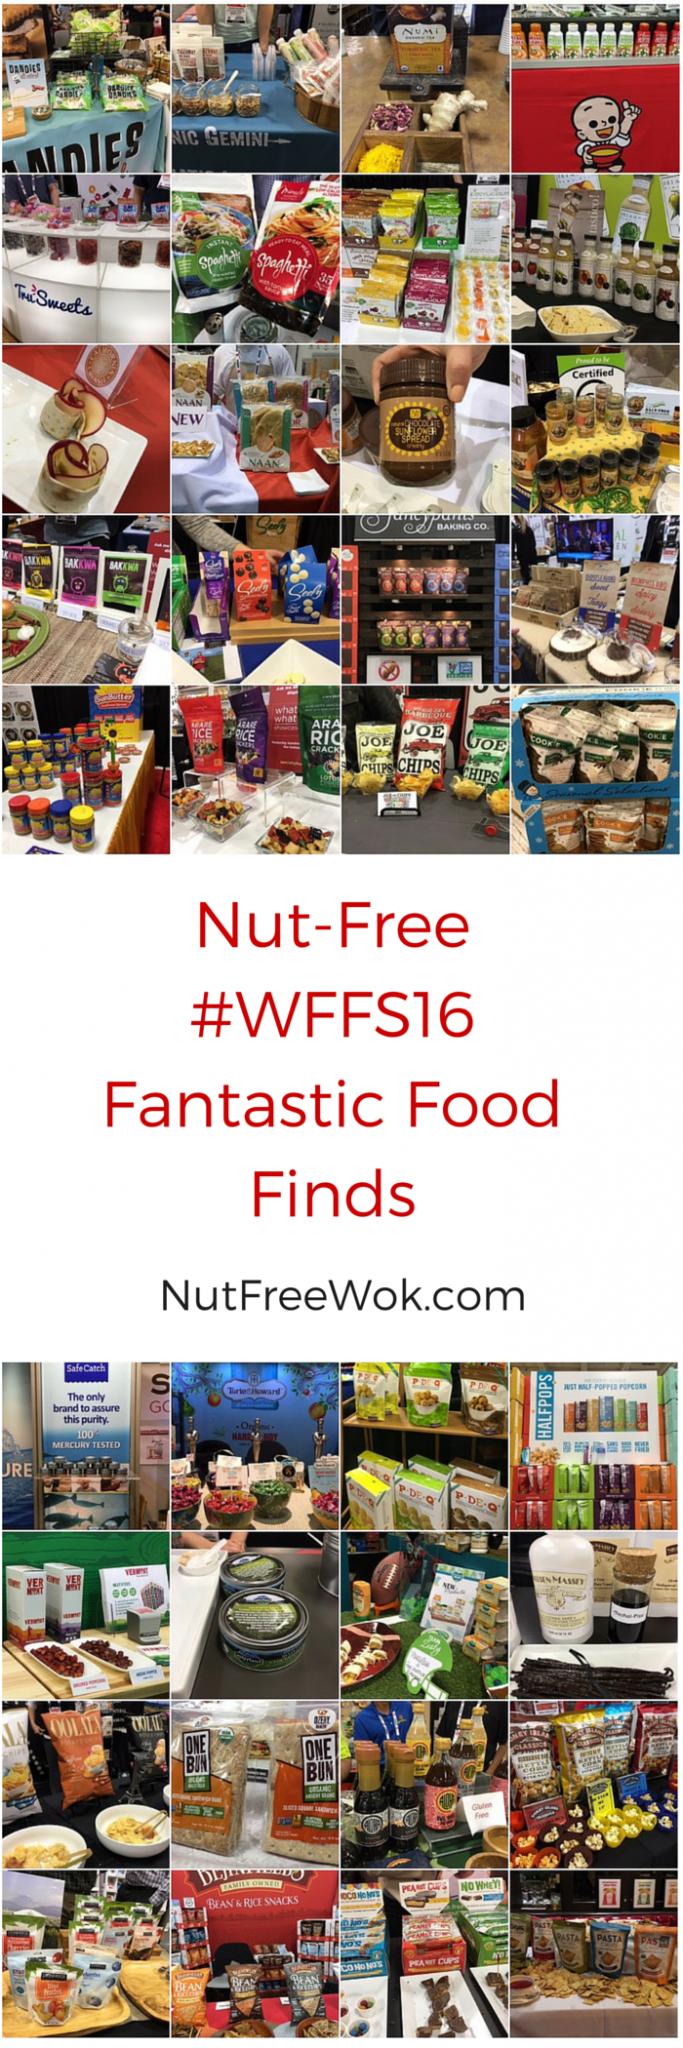 Nut-Free #WFFS16 Fantastic Food Finds